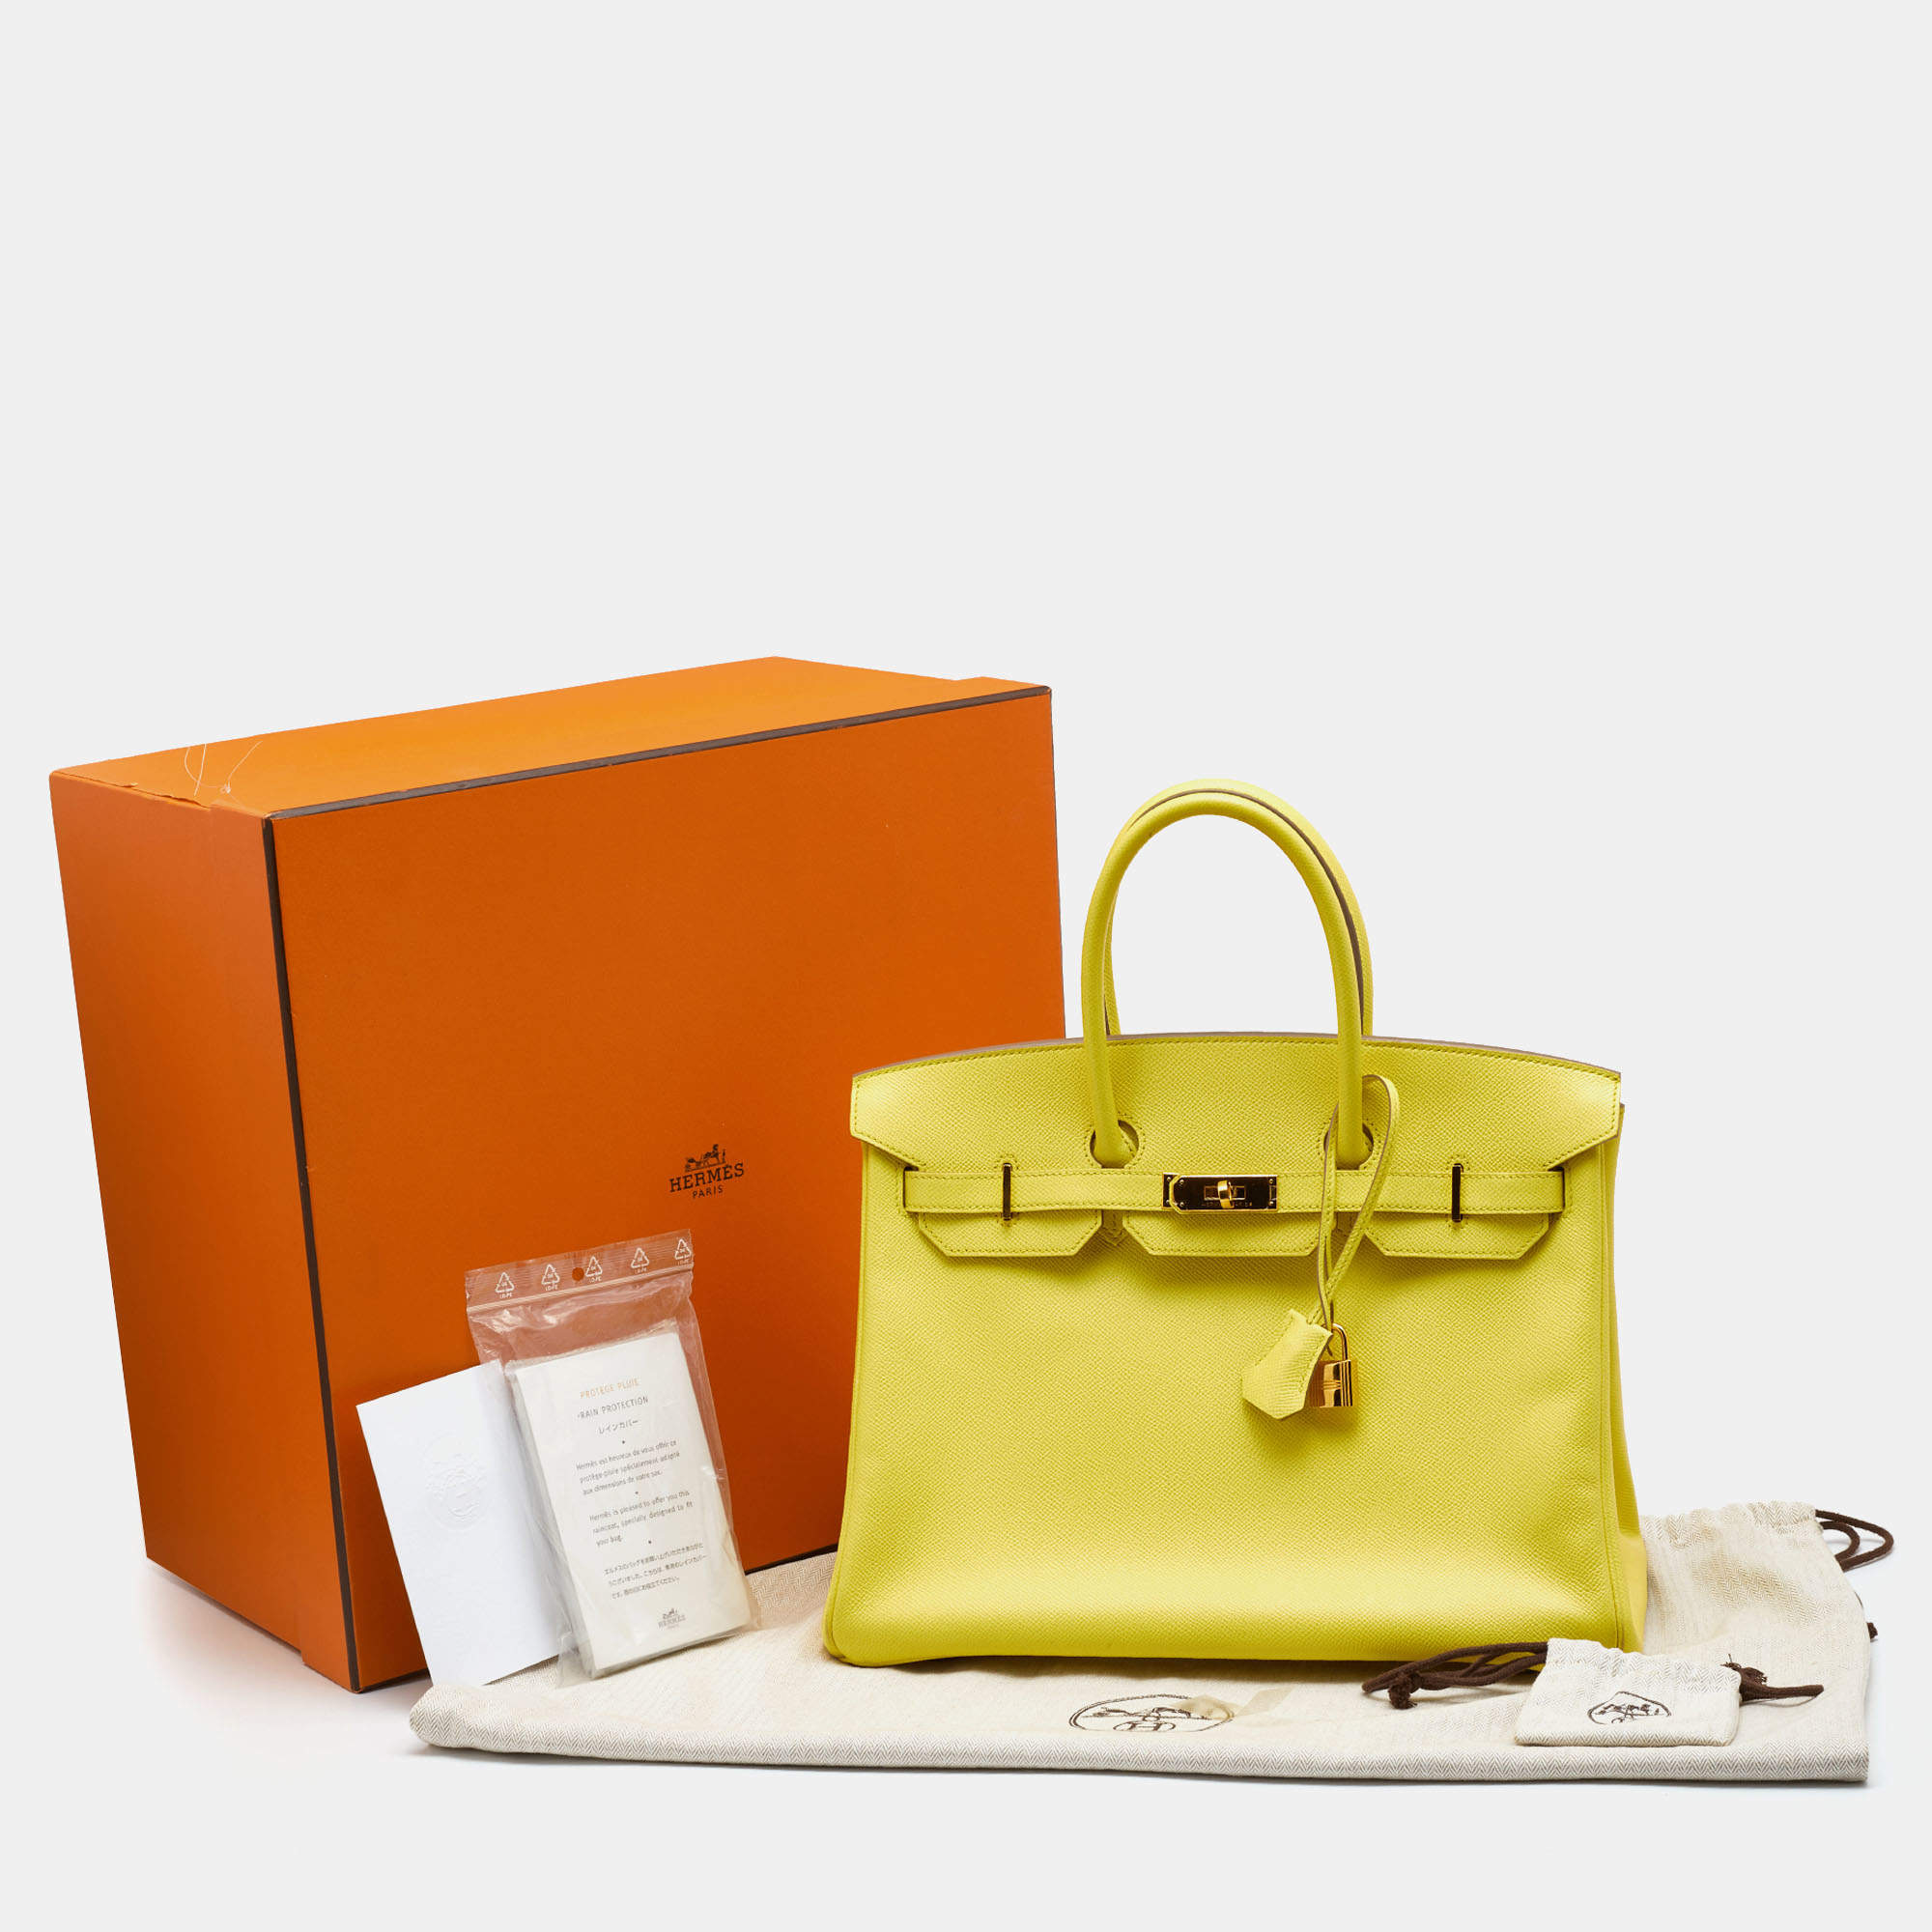 Hermès Soufre Birkin 35cm of Epsom Leather with Palladium Hardware, Handbags and Accessories Online, 2019